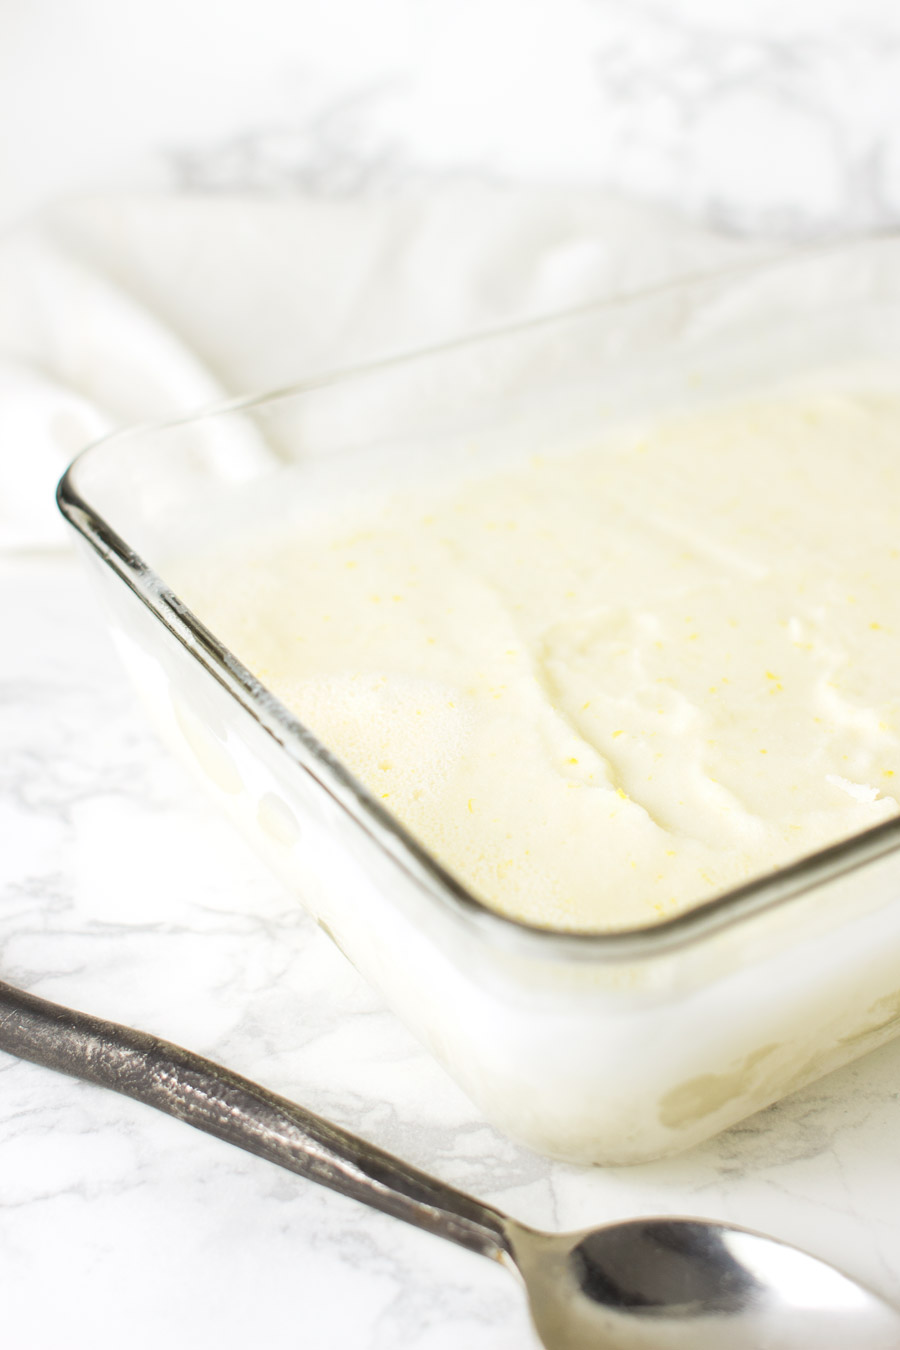 Meyer Lemon Ice Cream recipe from acleanplate.com #paleo #aip #glutenfree